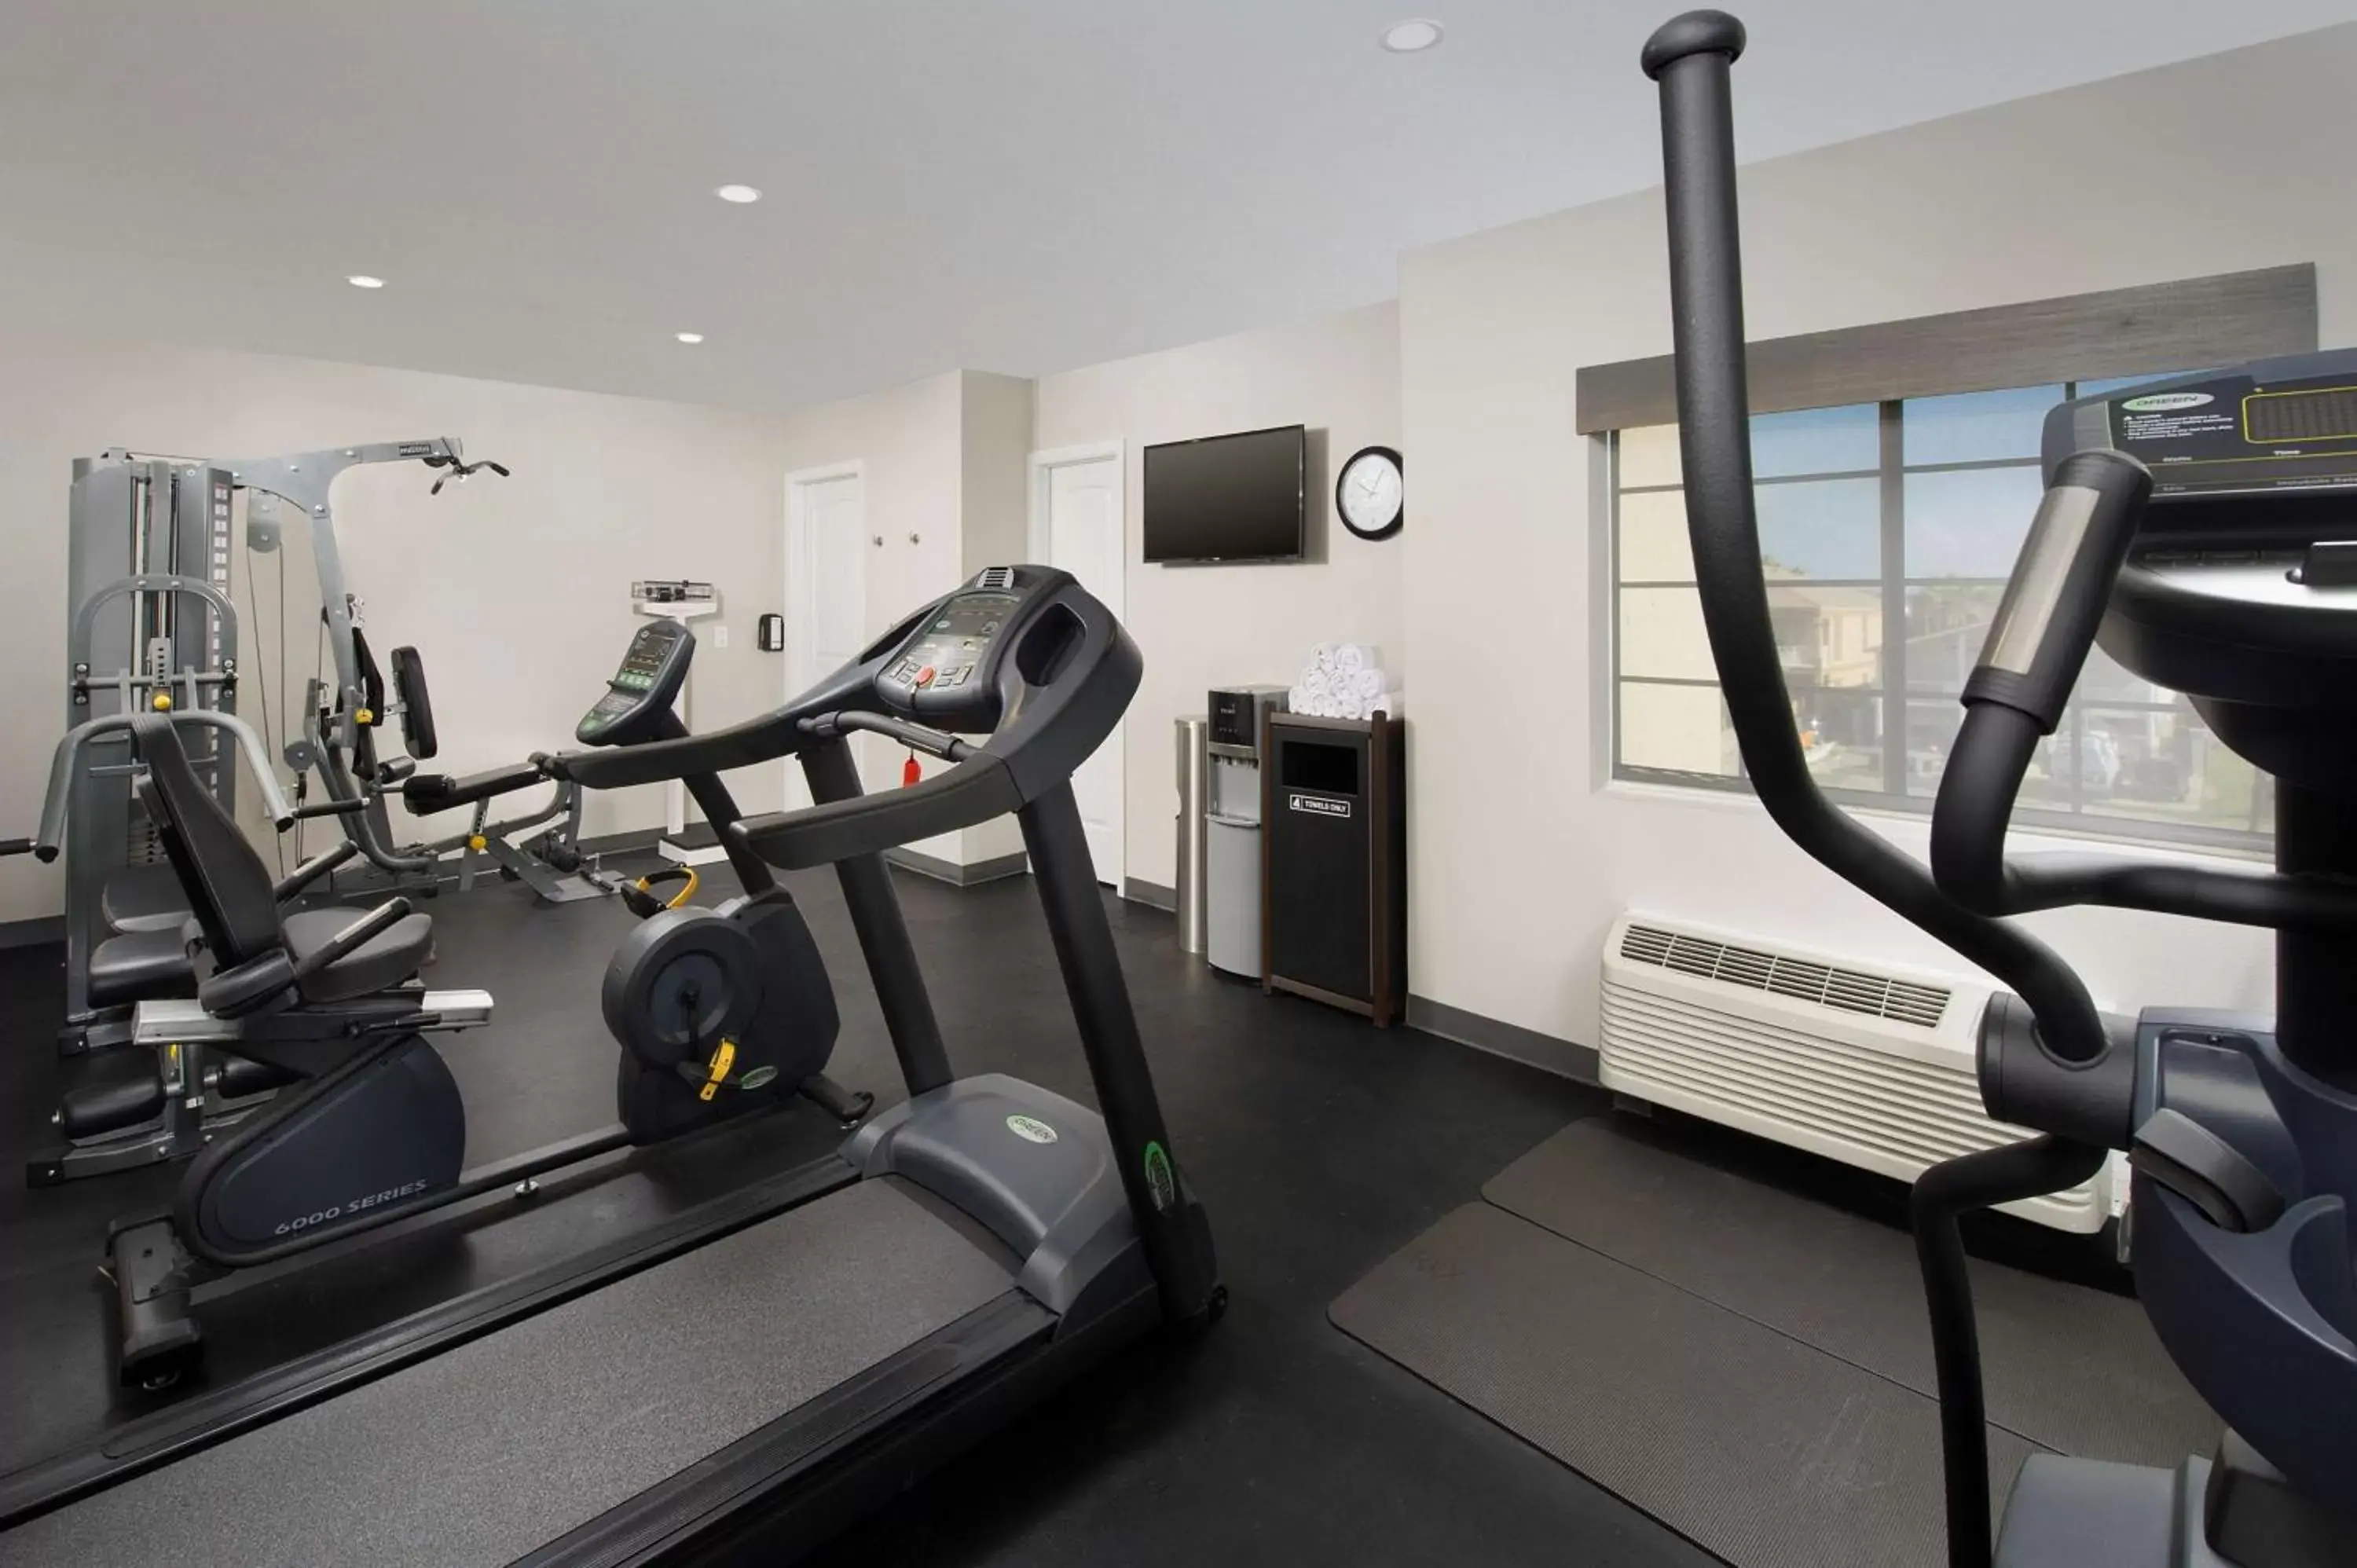 Fitness centre/facilities, Fitness Center/Facilities in Best Western Beachside Inn